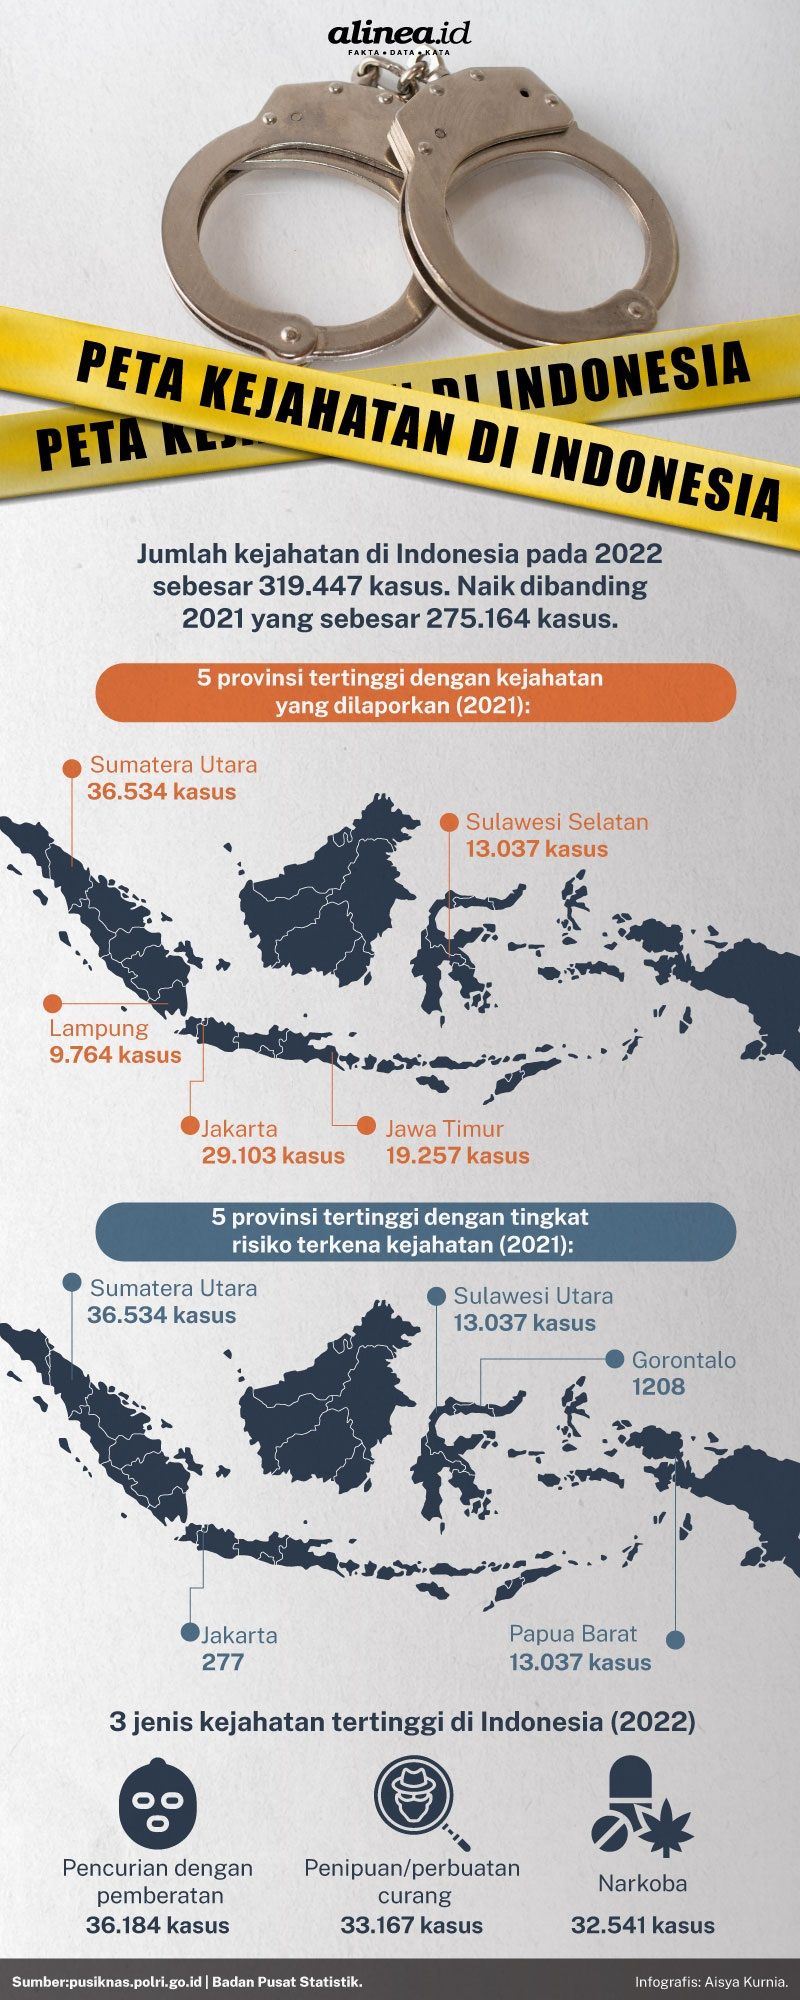 Infografik kriminalitas di Indonesia. Alinea.id/Aisya Kurnia